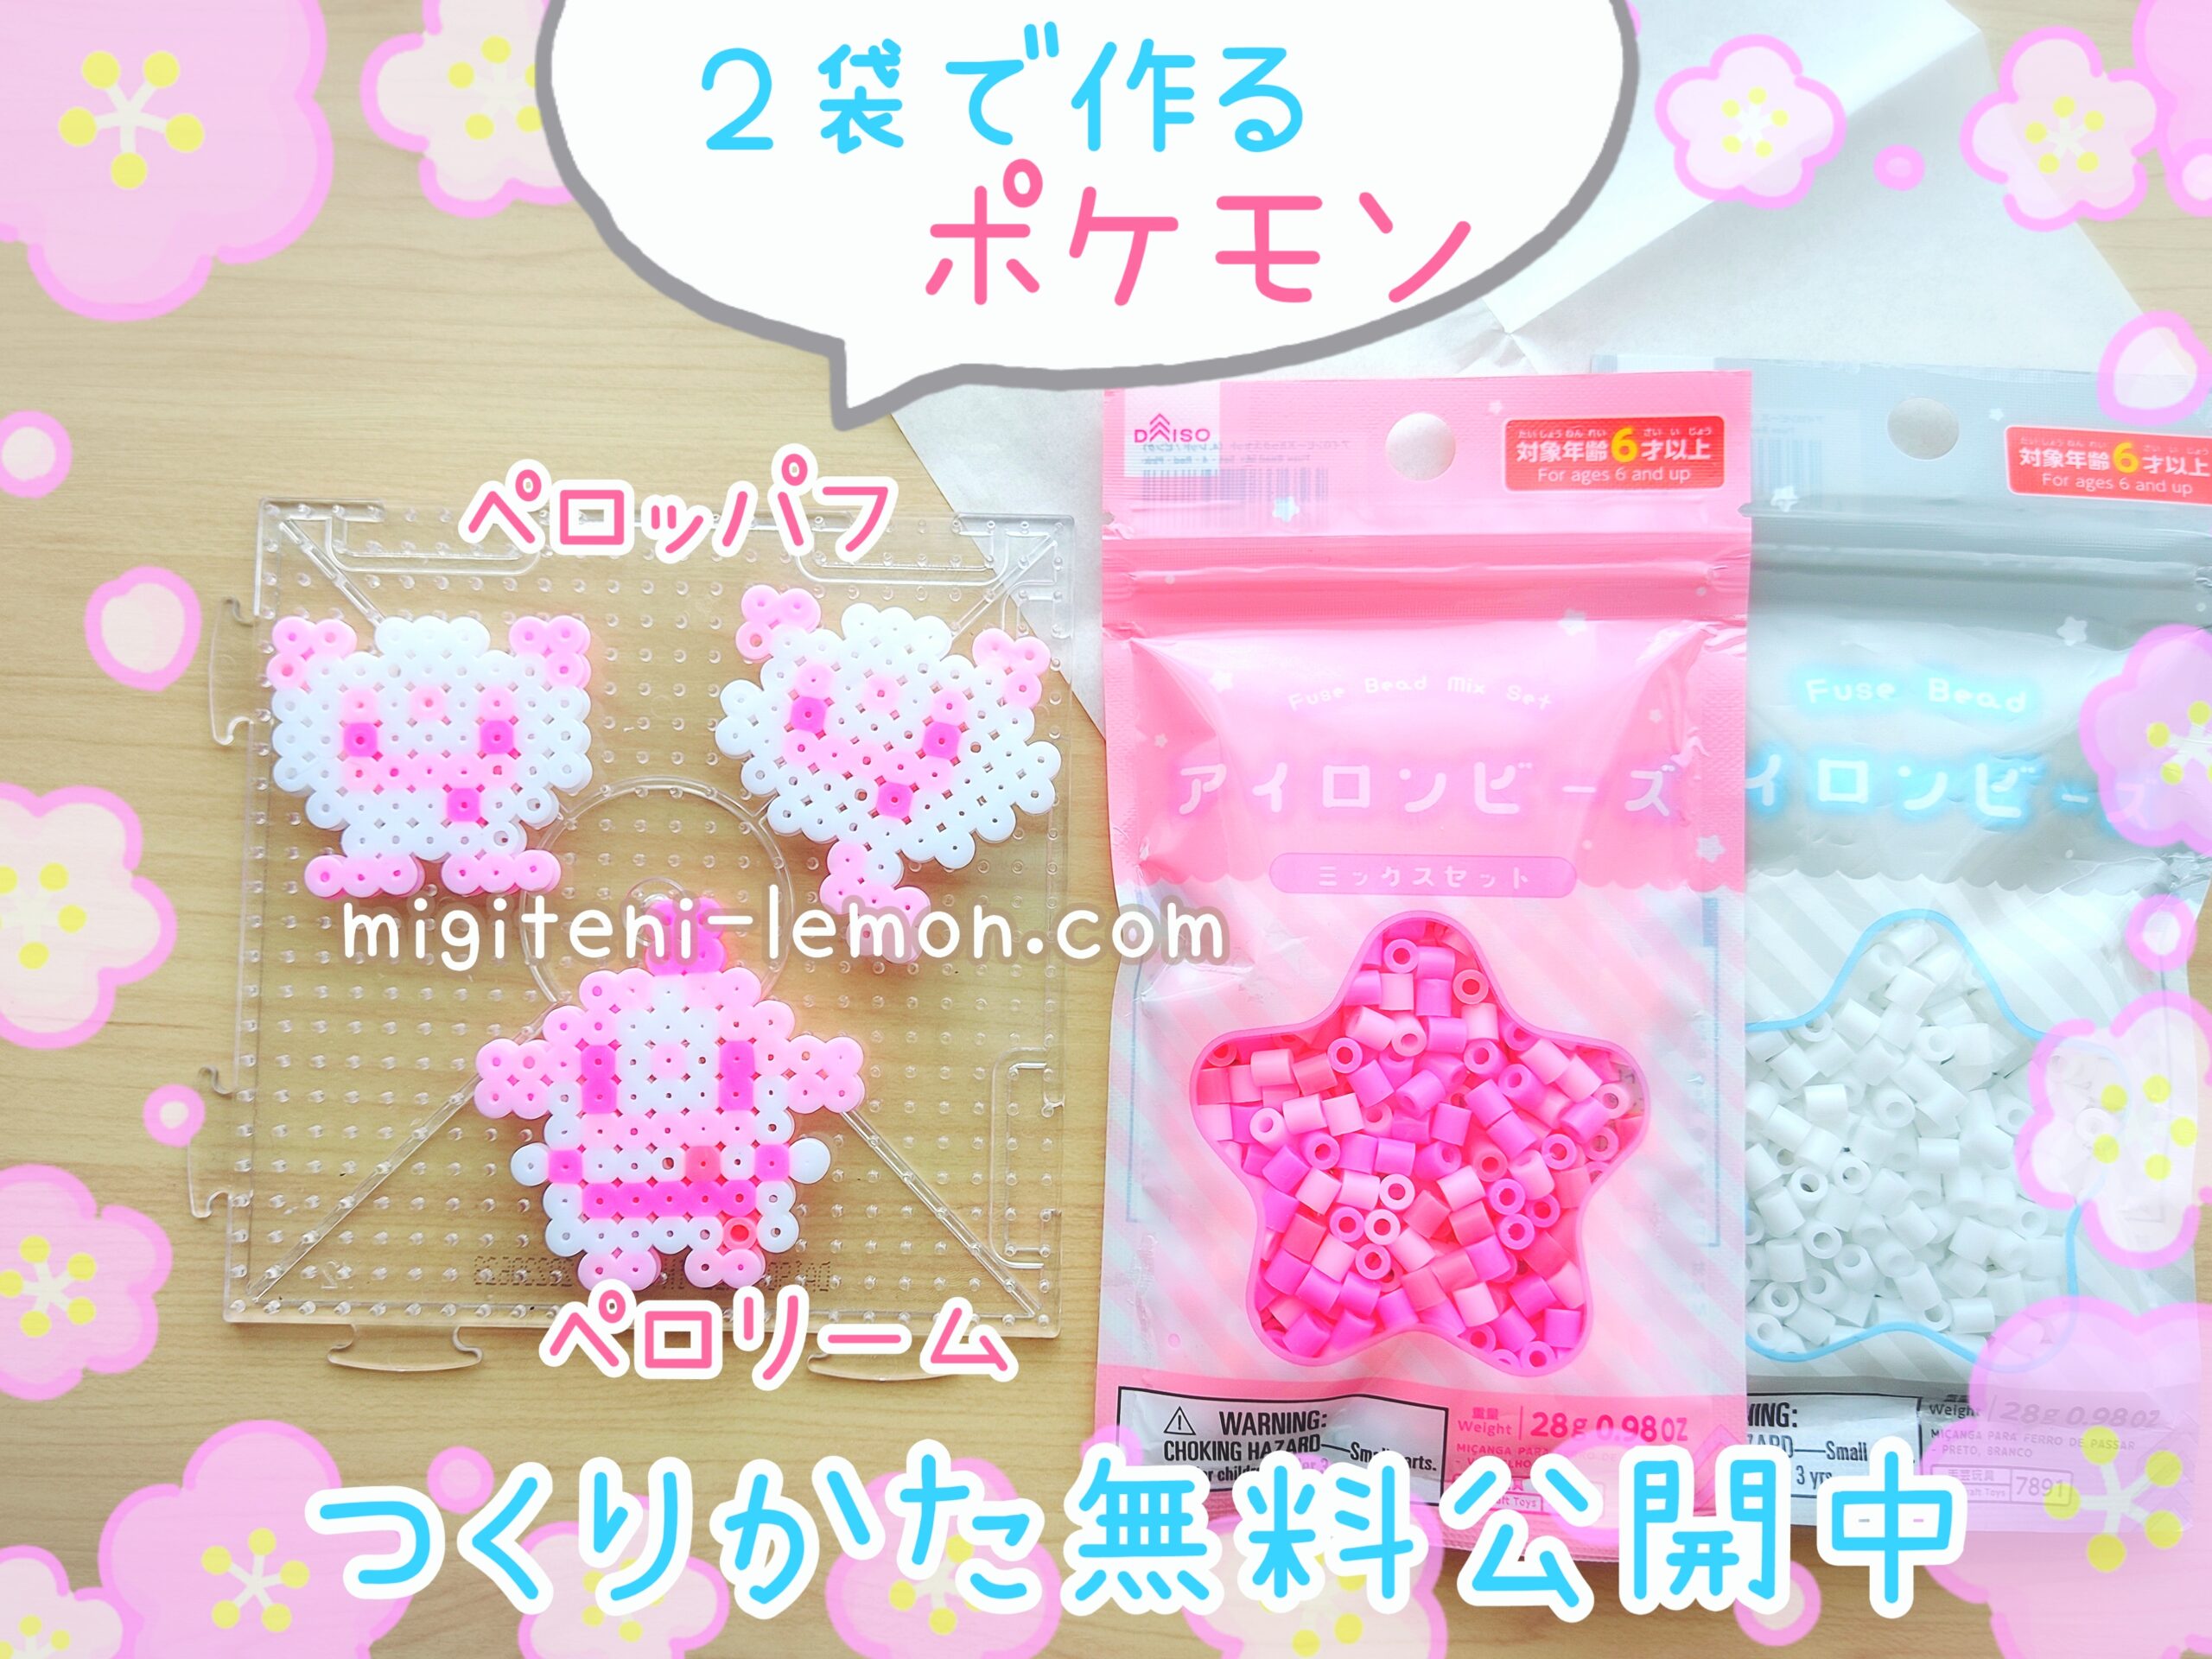 peroppafu-peroream-kawaii-pokemon-daiso-beads-zuan